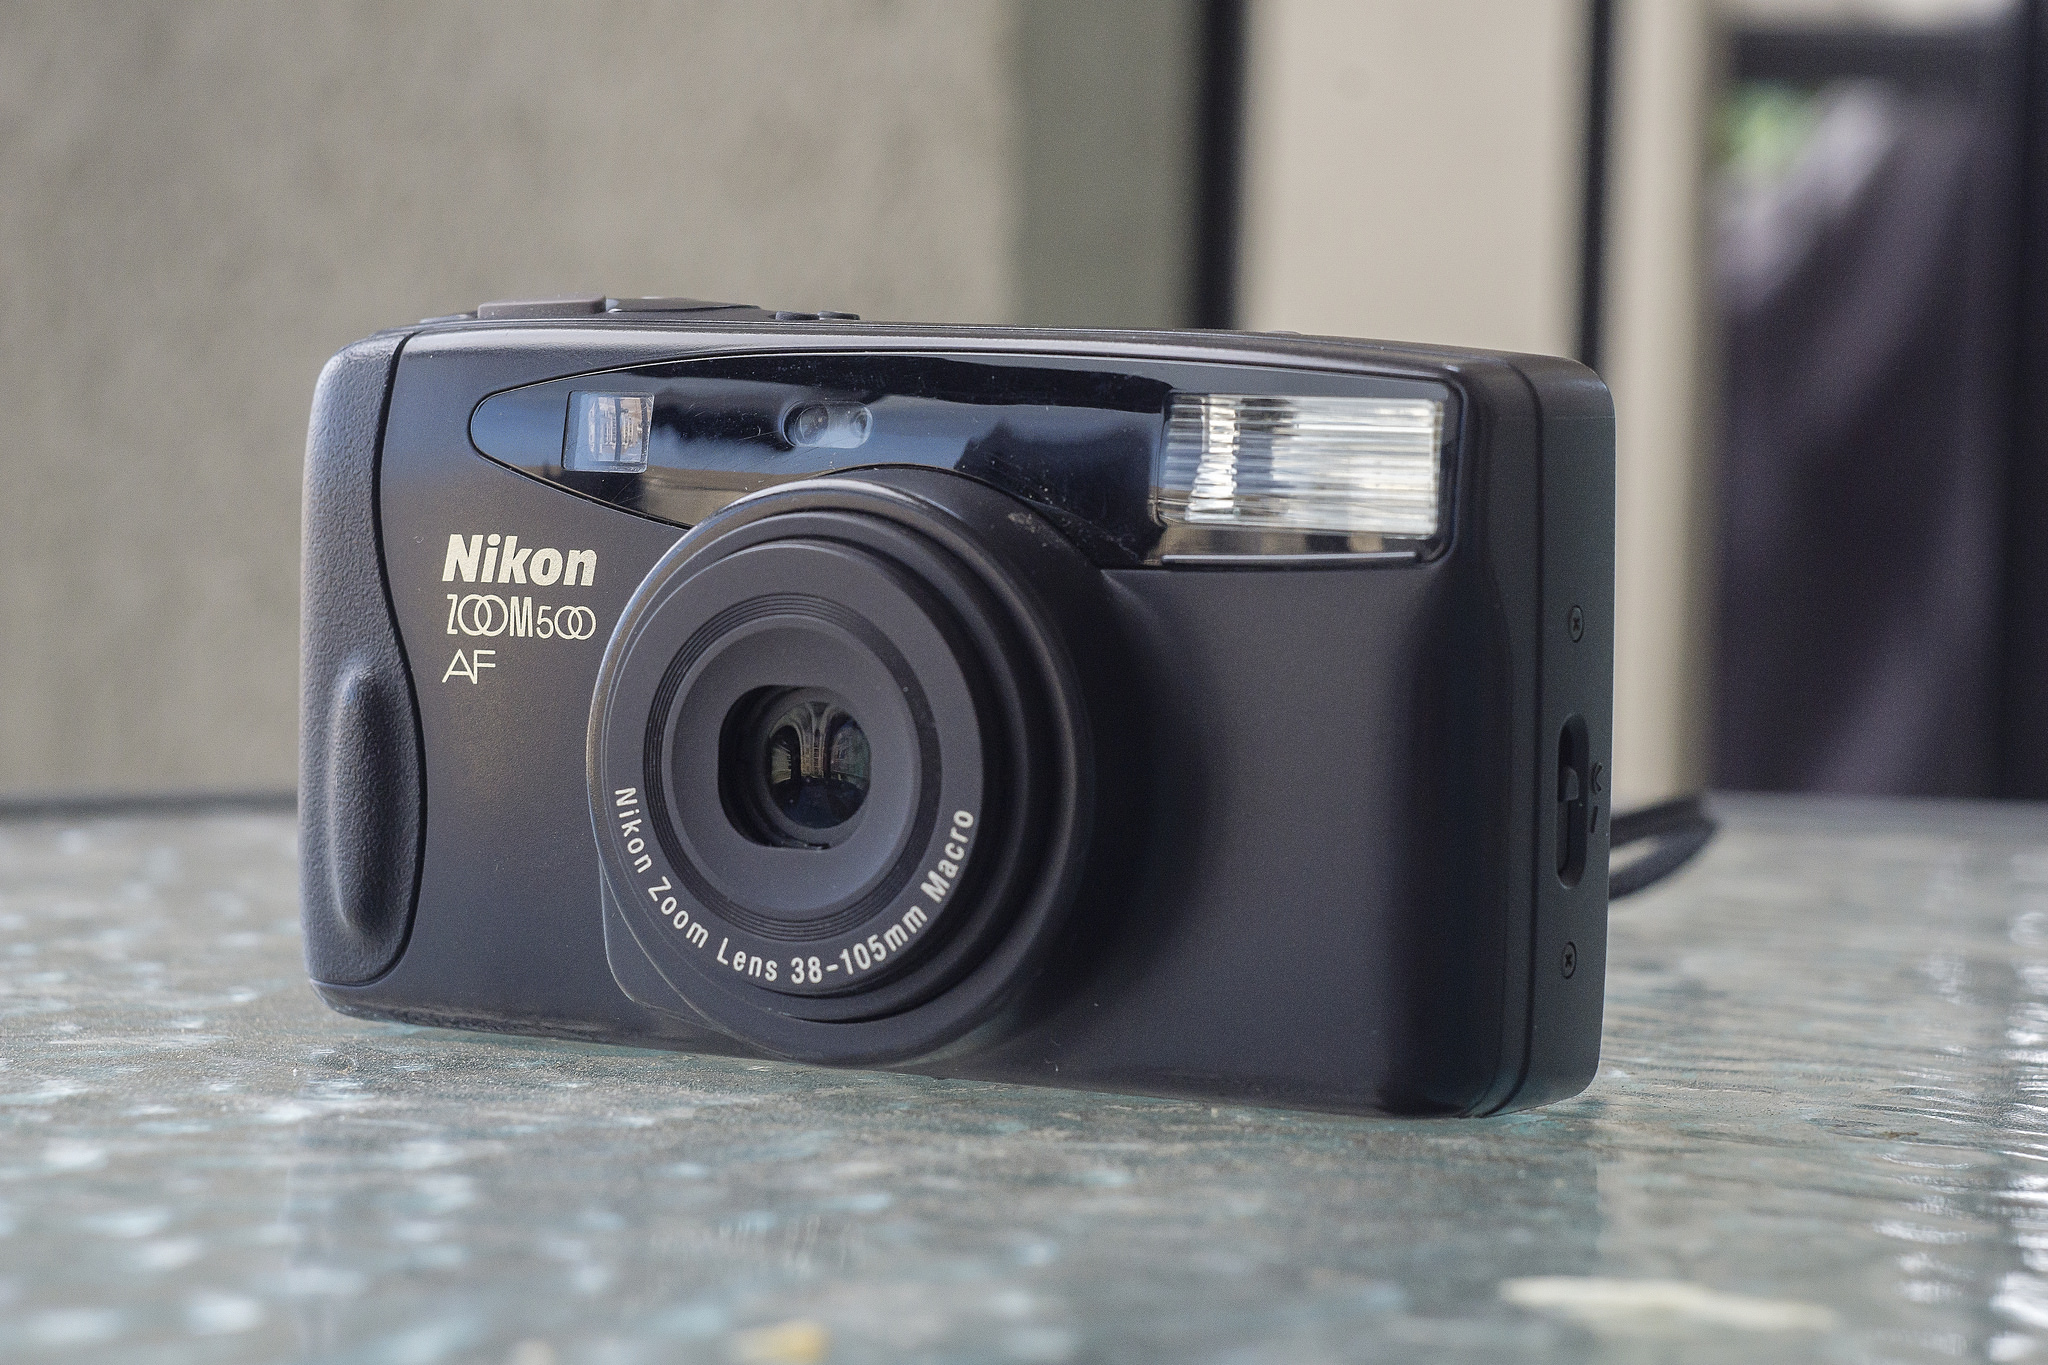 CCR Review 71 – Nikon Zoom 500AF – Alex Luyckx | Blog